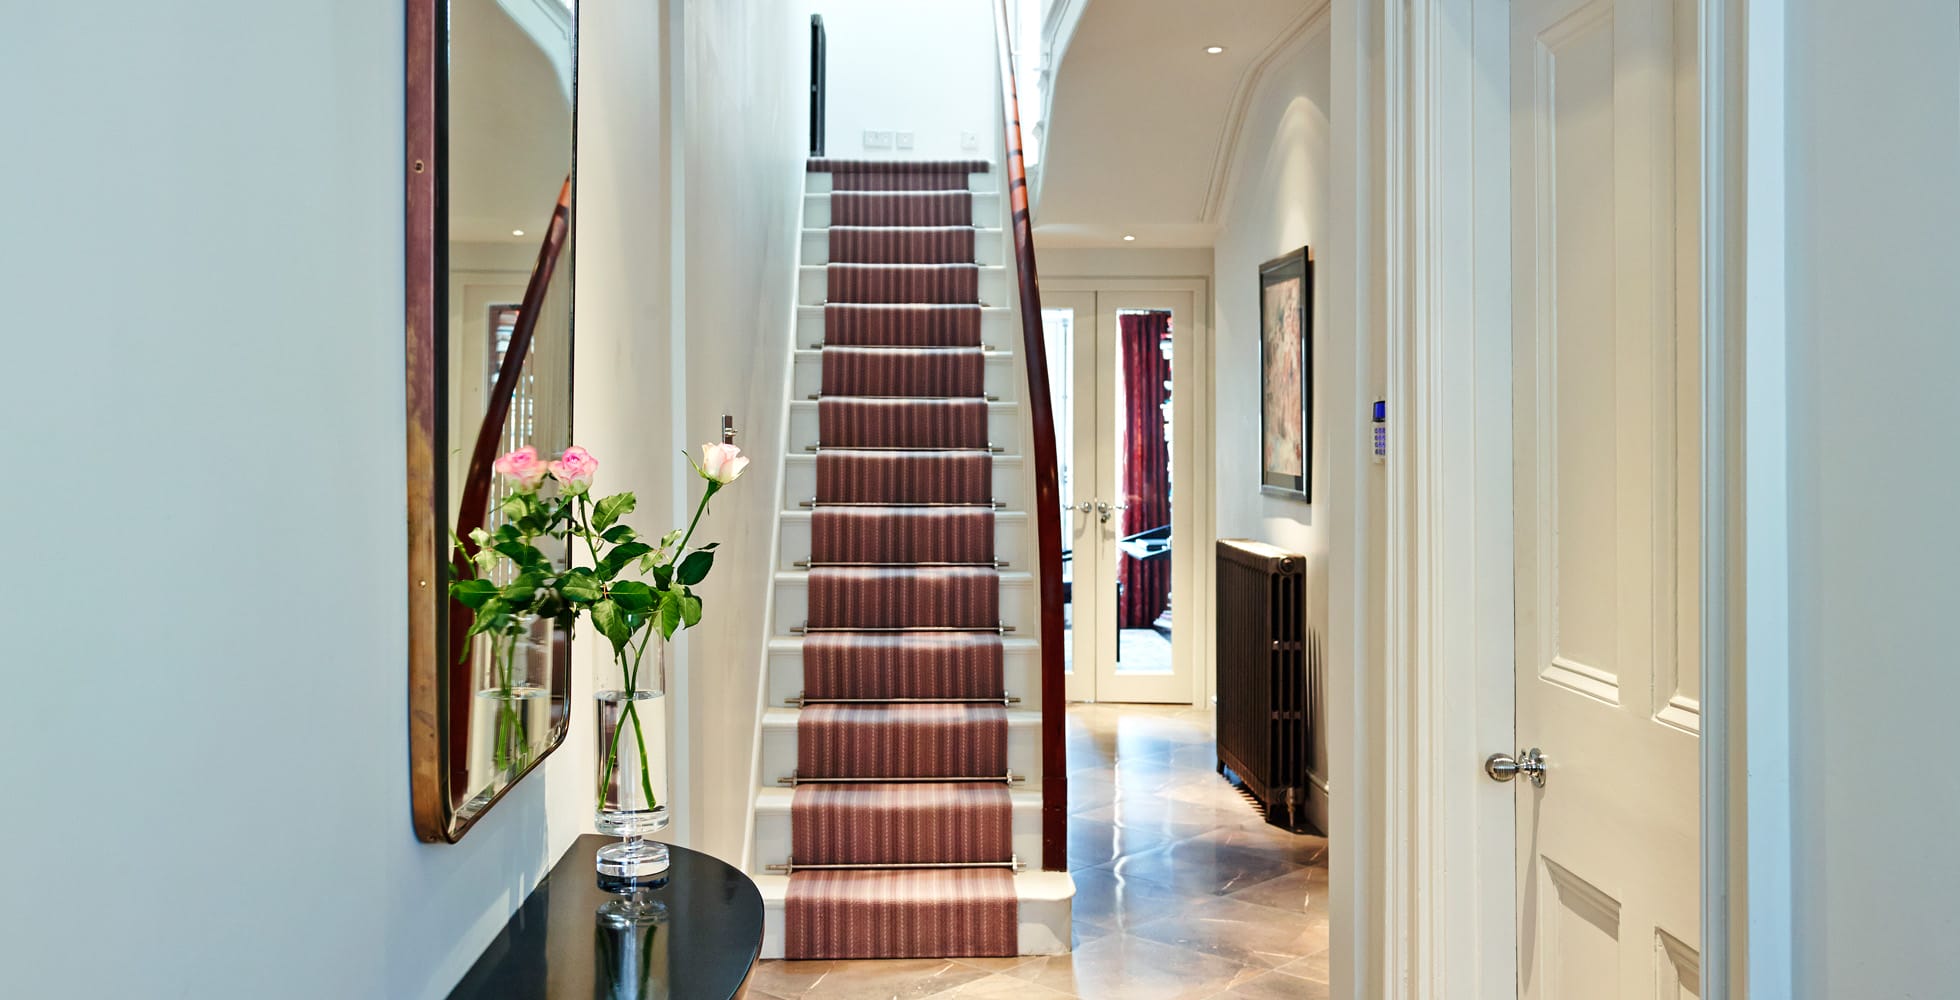 Hallway | John Evans Design | Blog